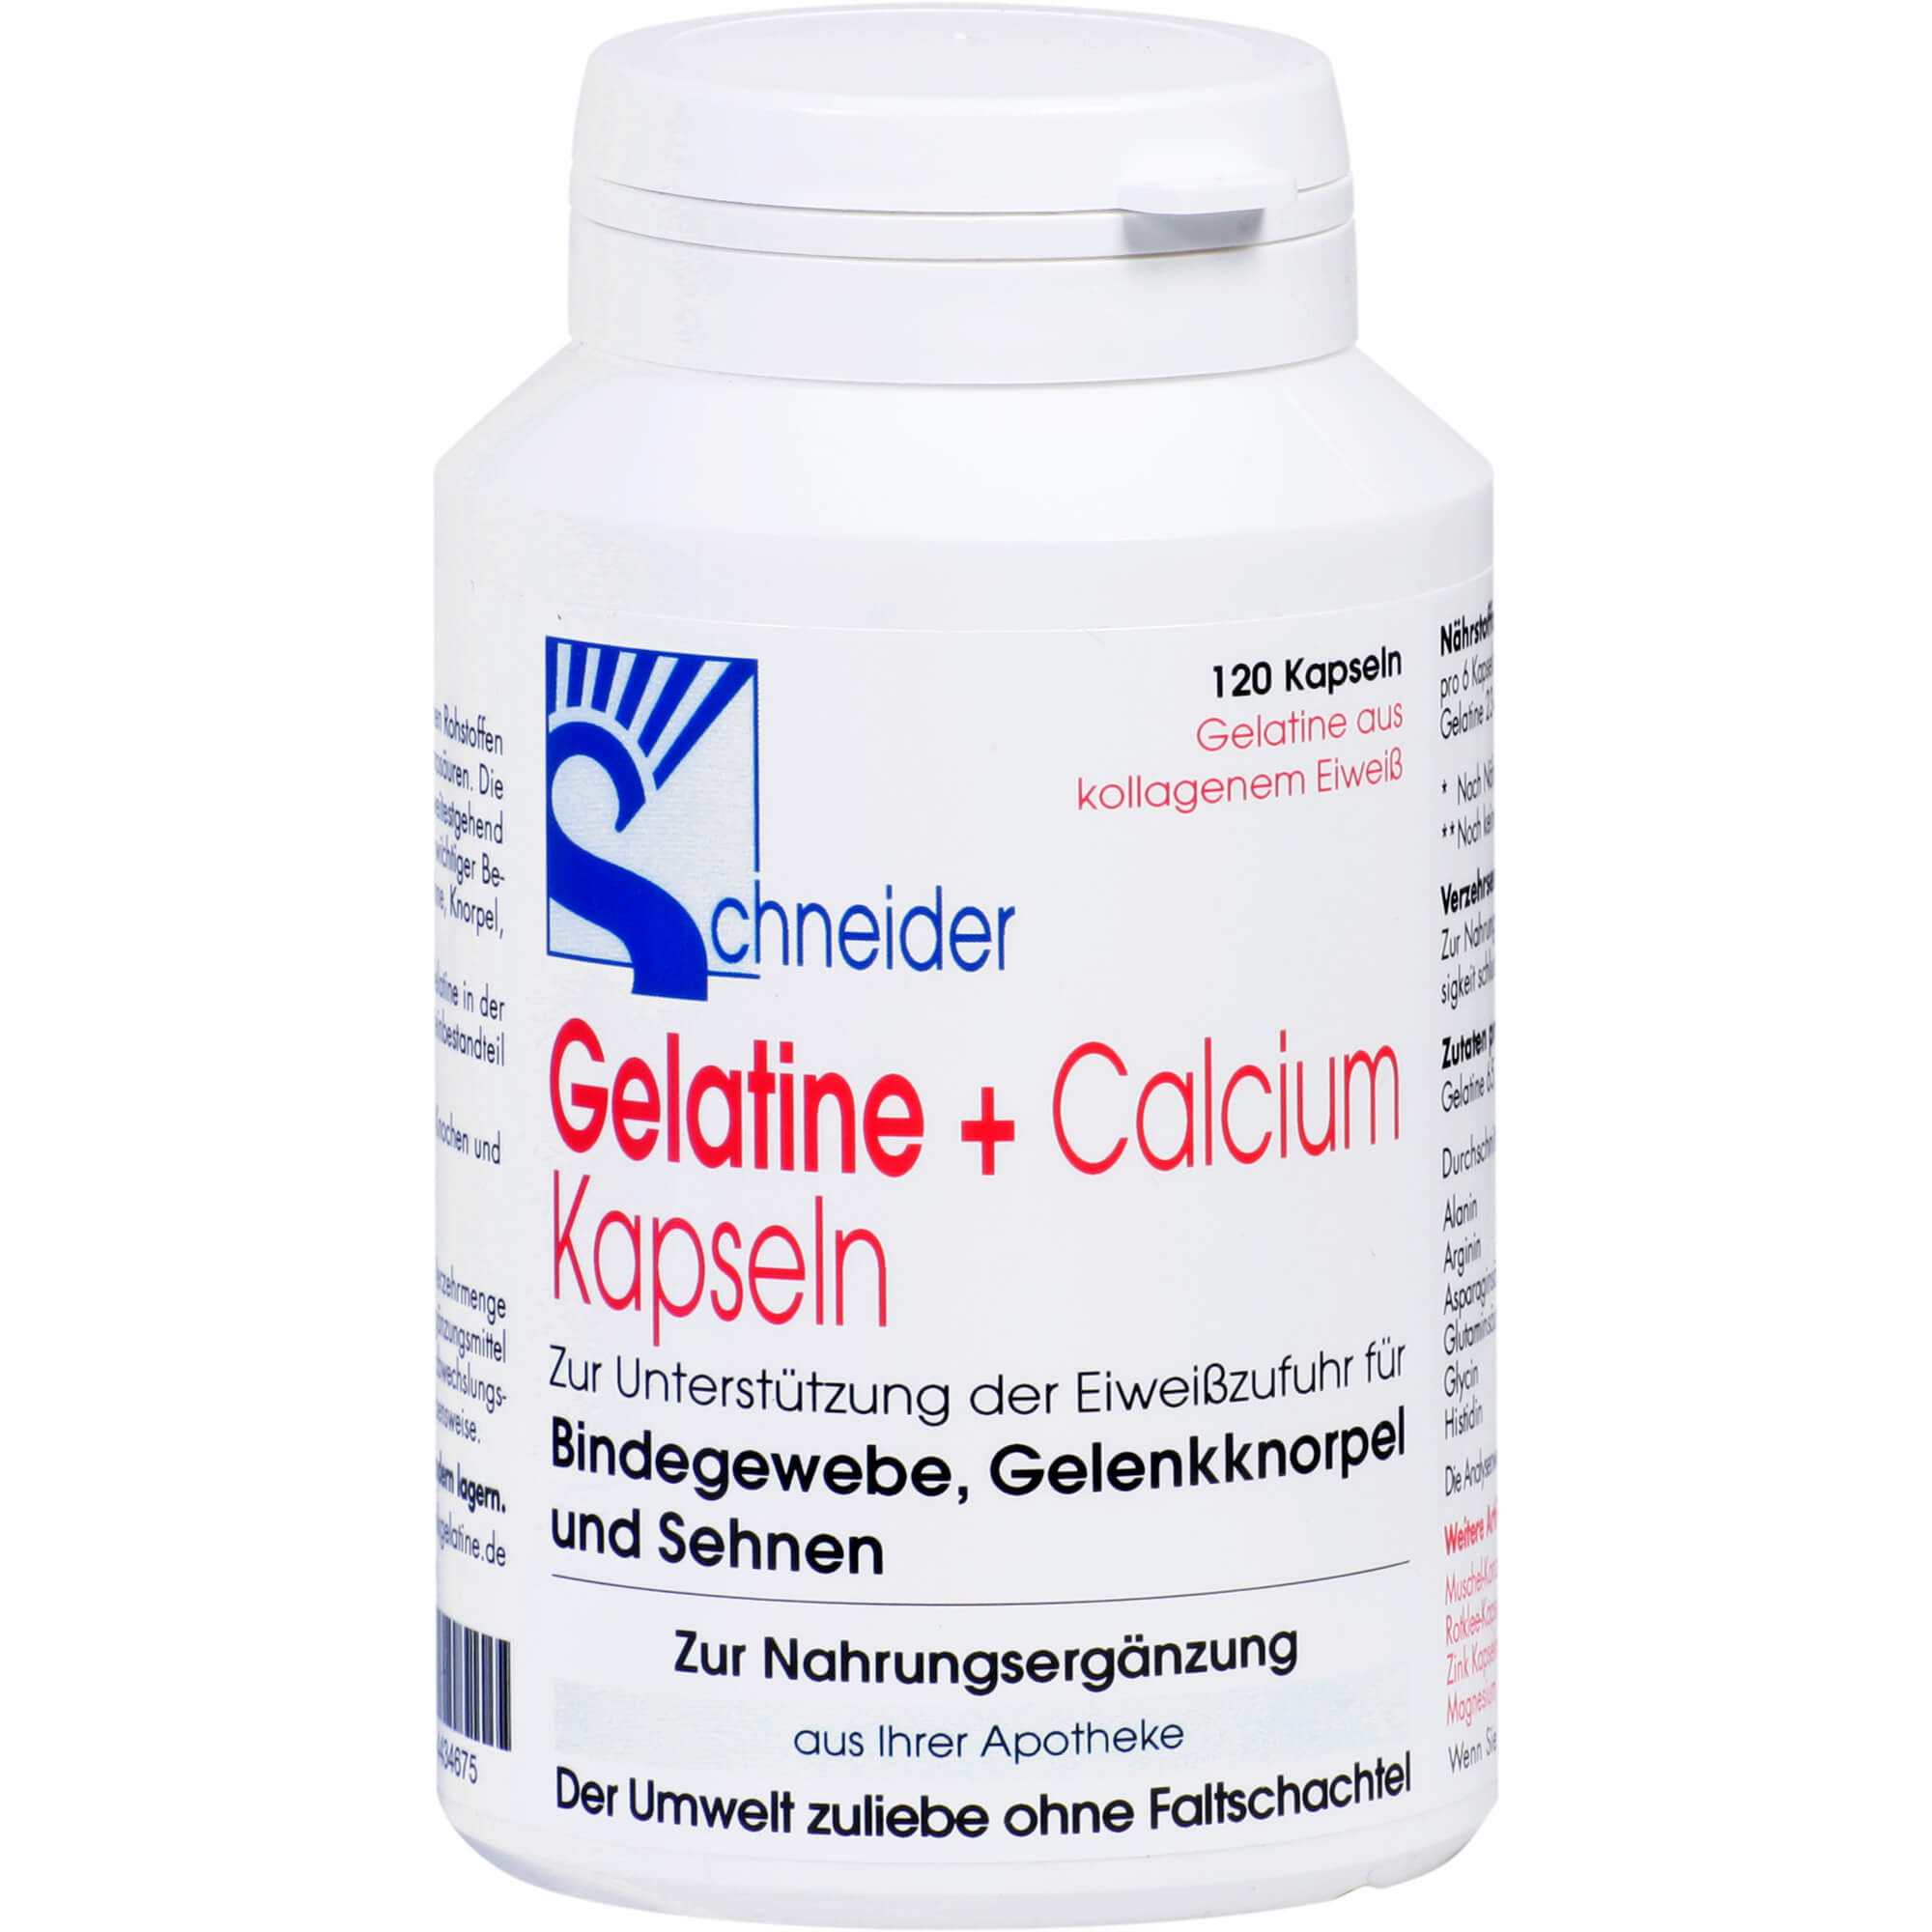 Gelatine + Calcium Kapseln.